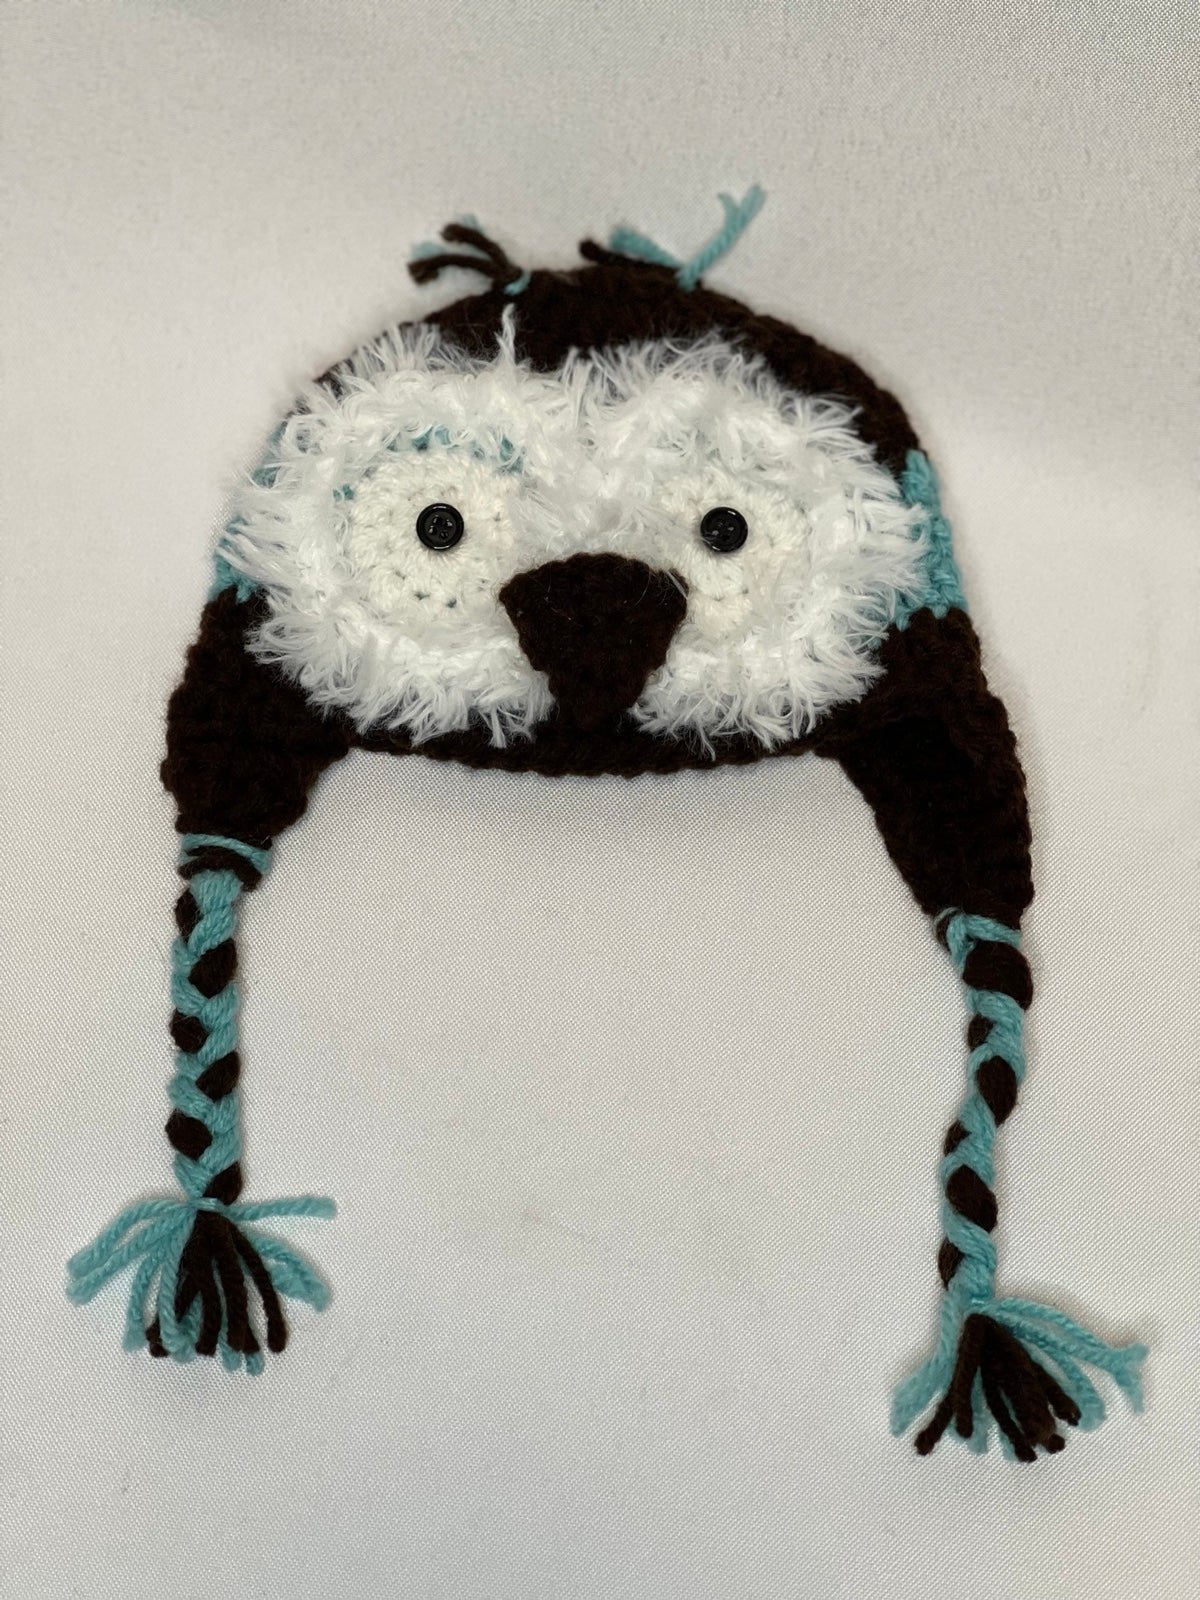 NWOT Handmade crochet infant hat snowy owl brown blue ADORABLE! nVapZqESa